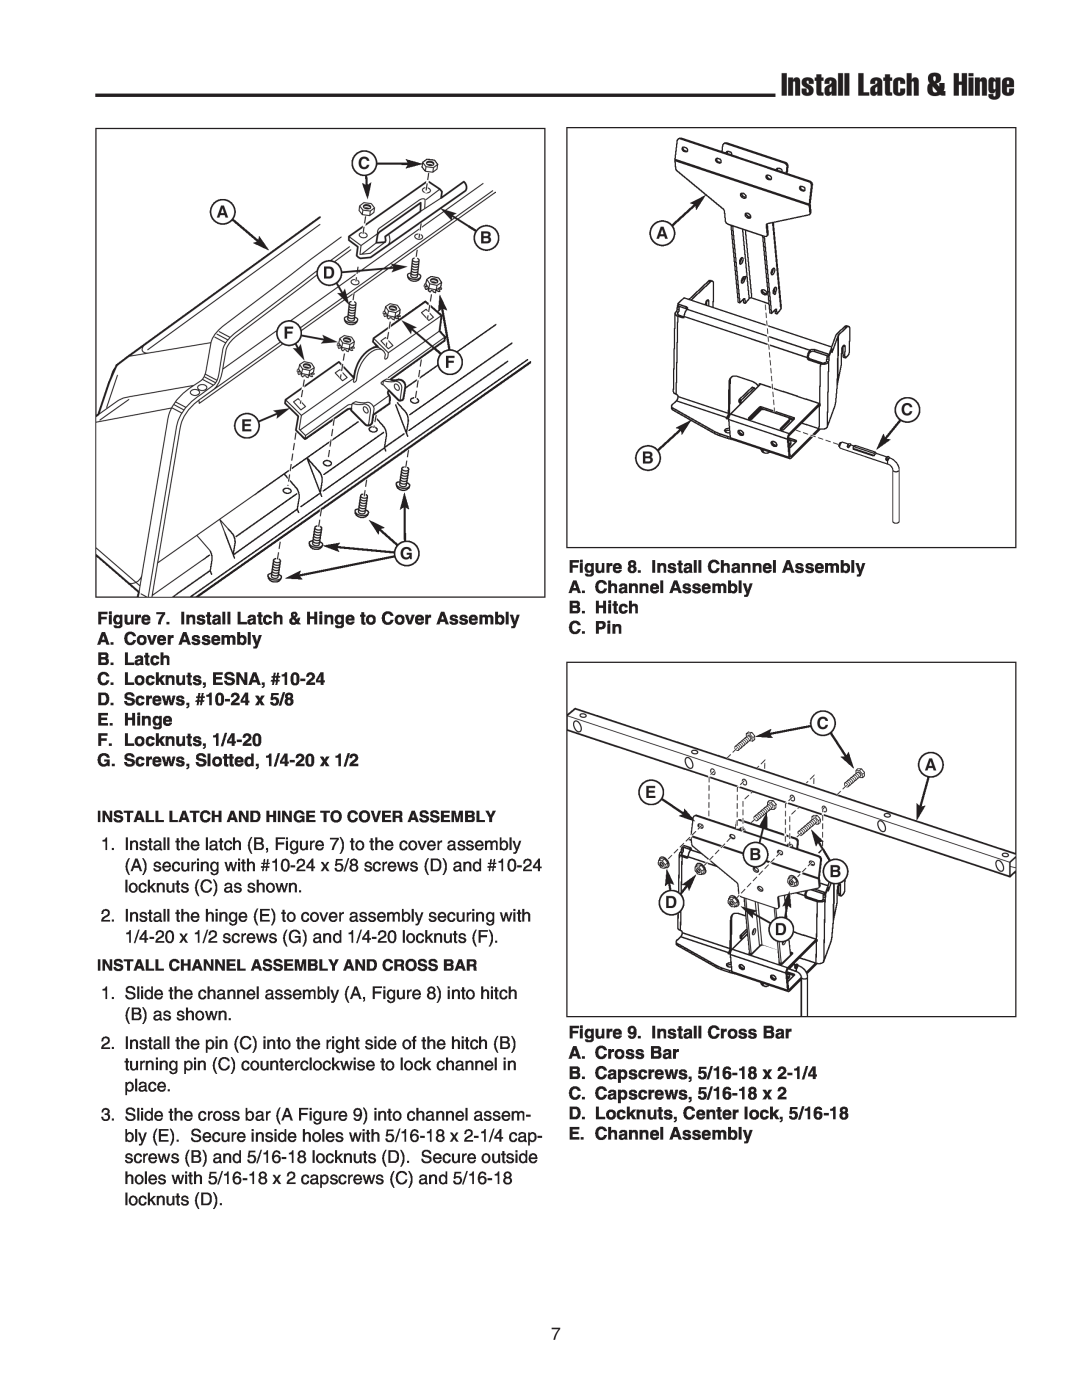 Simplicity 1694918 manual Install Latch & Hinge 